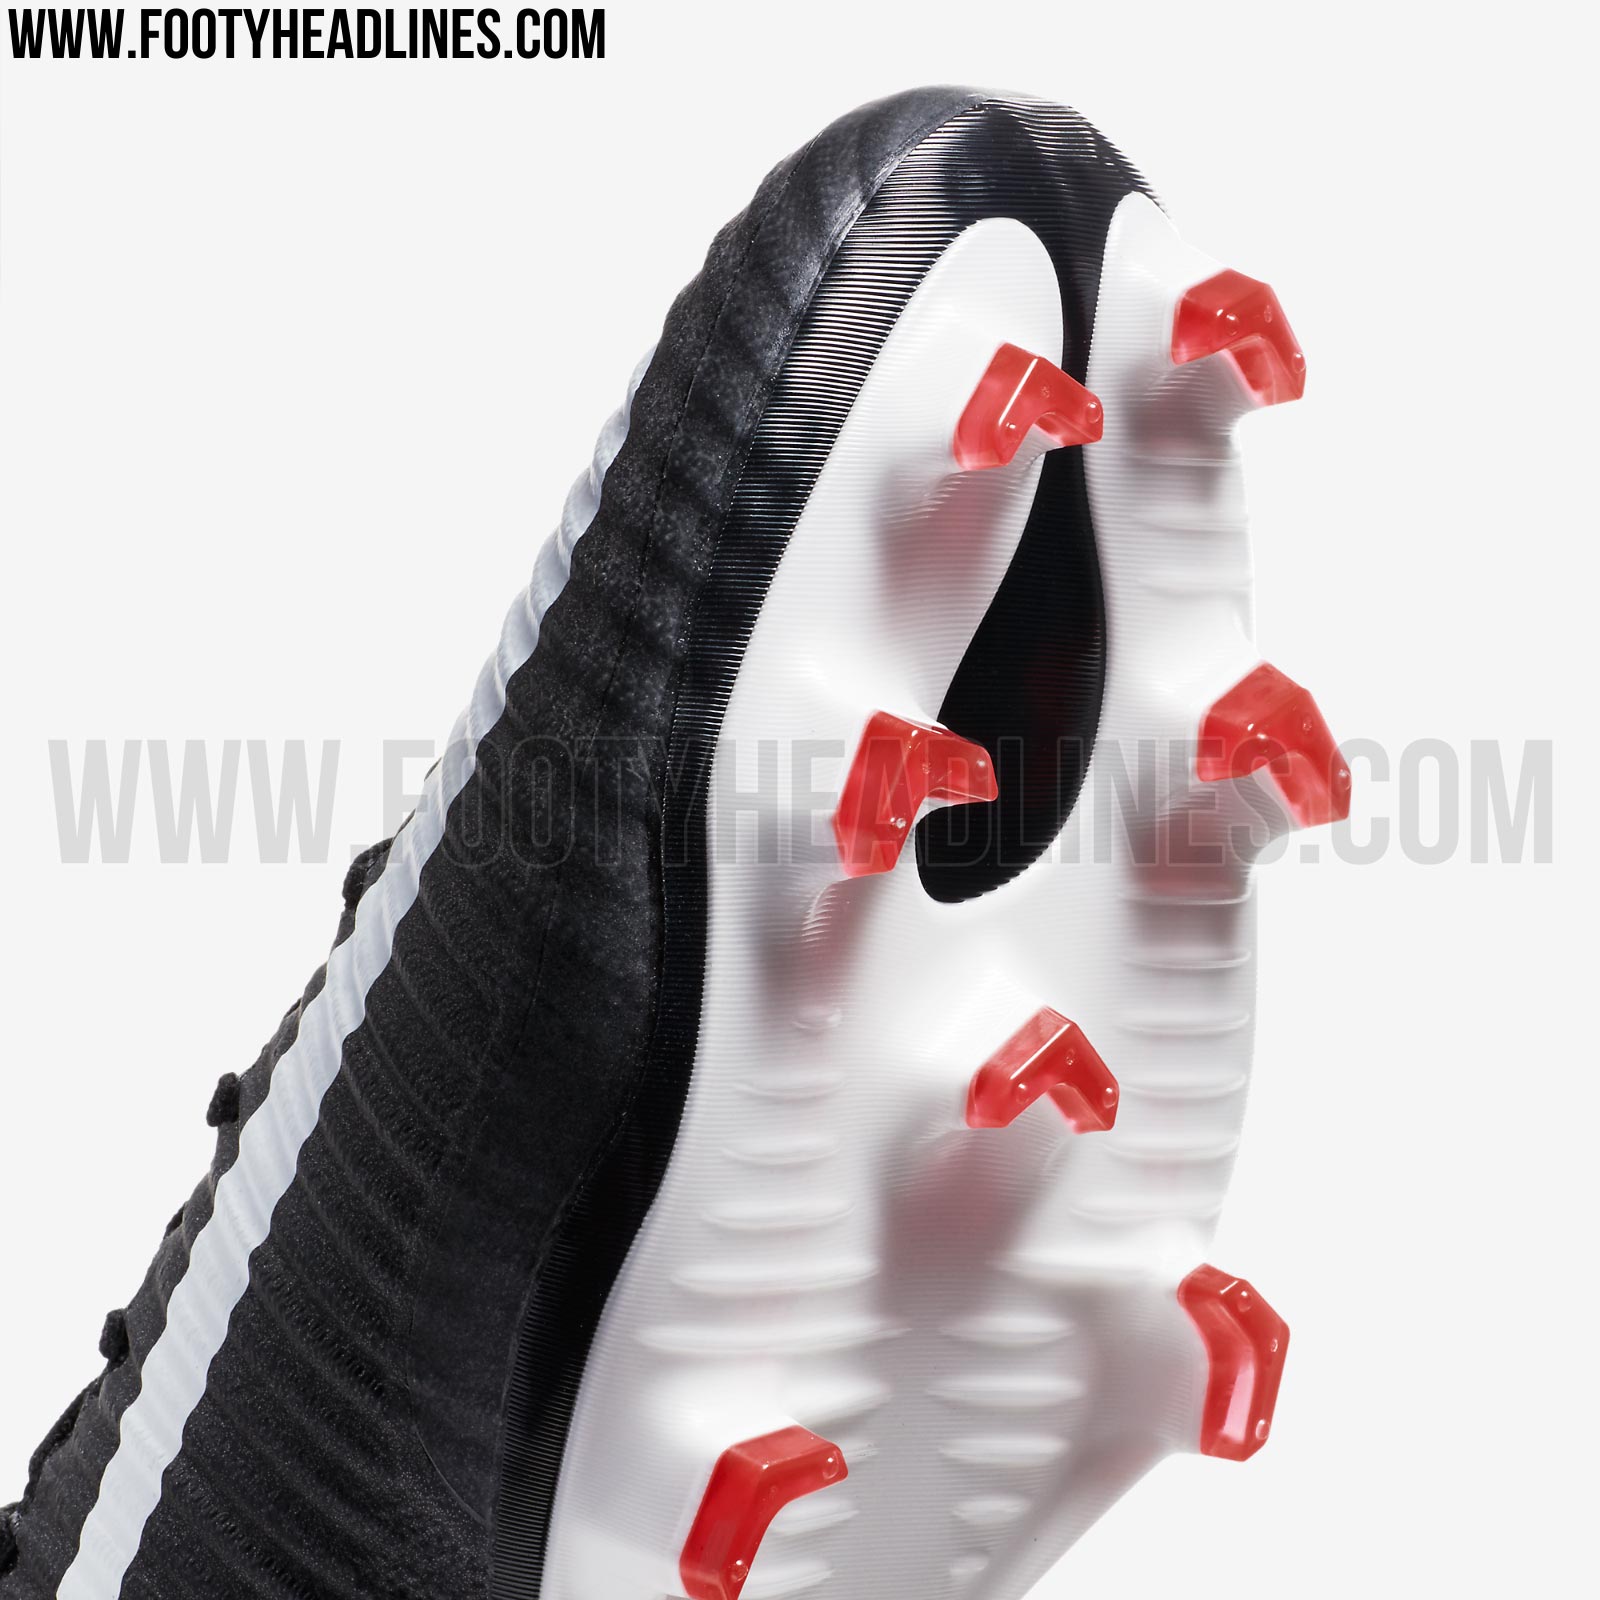 Black Nike Mercurial Superfly V Boots Leaked - Footy Headlines